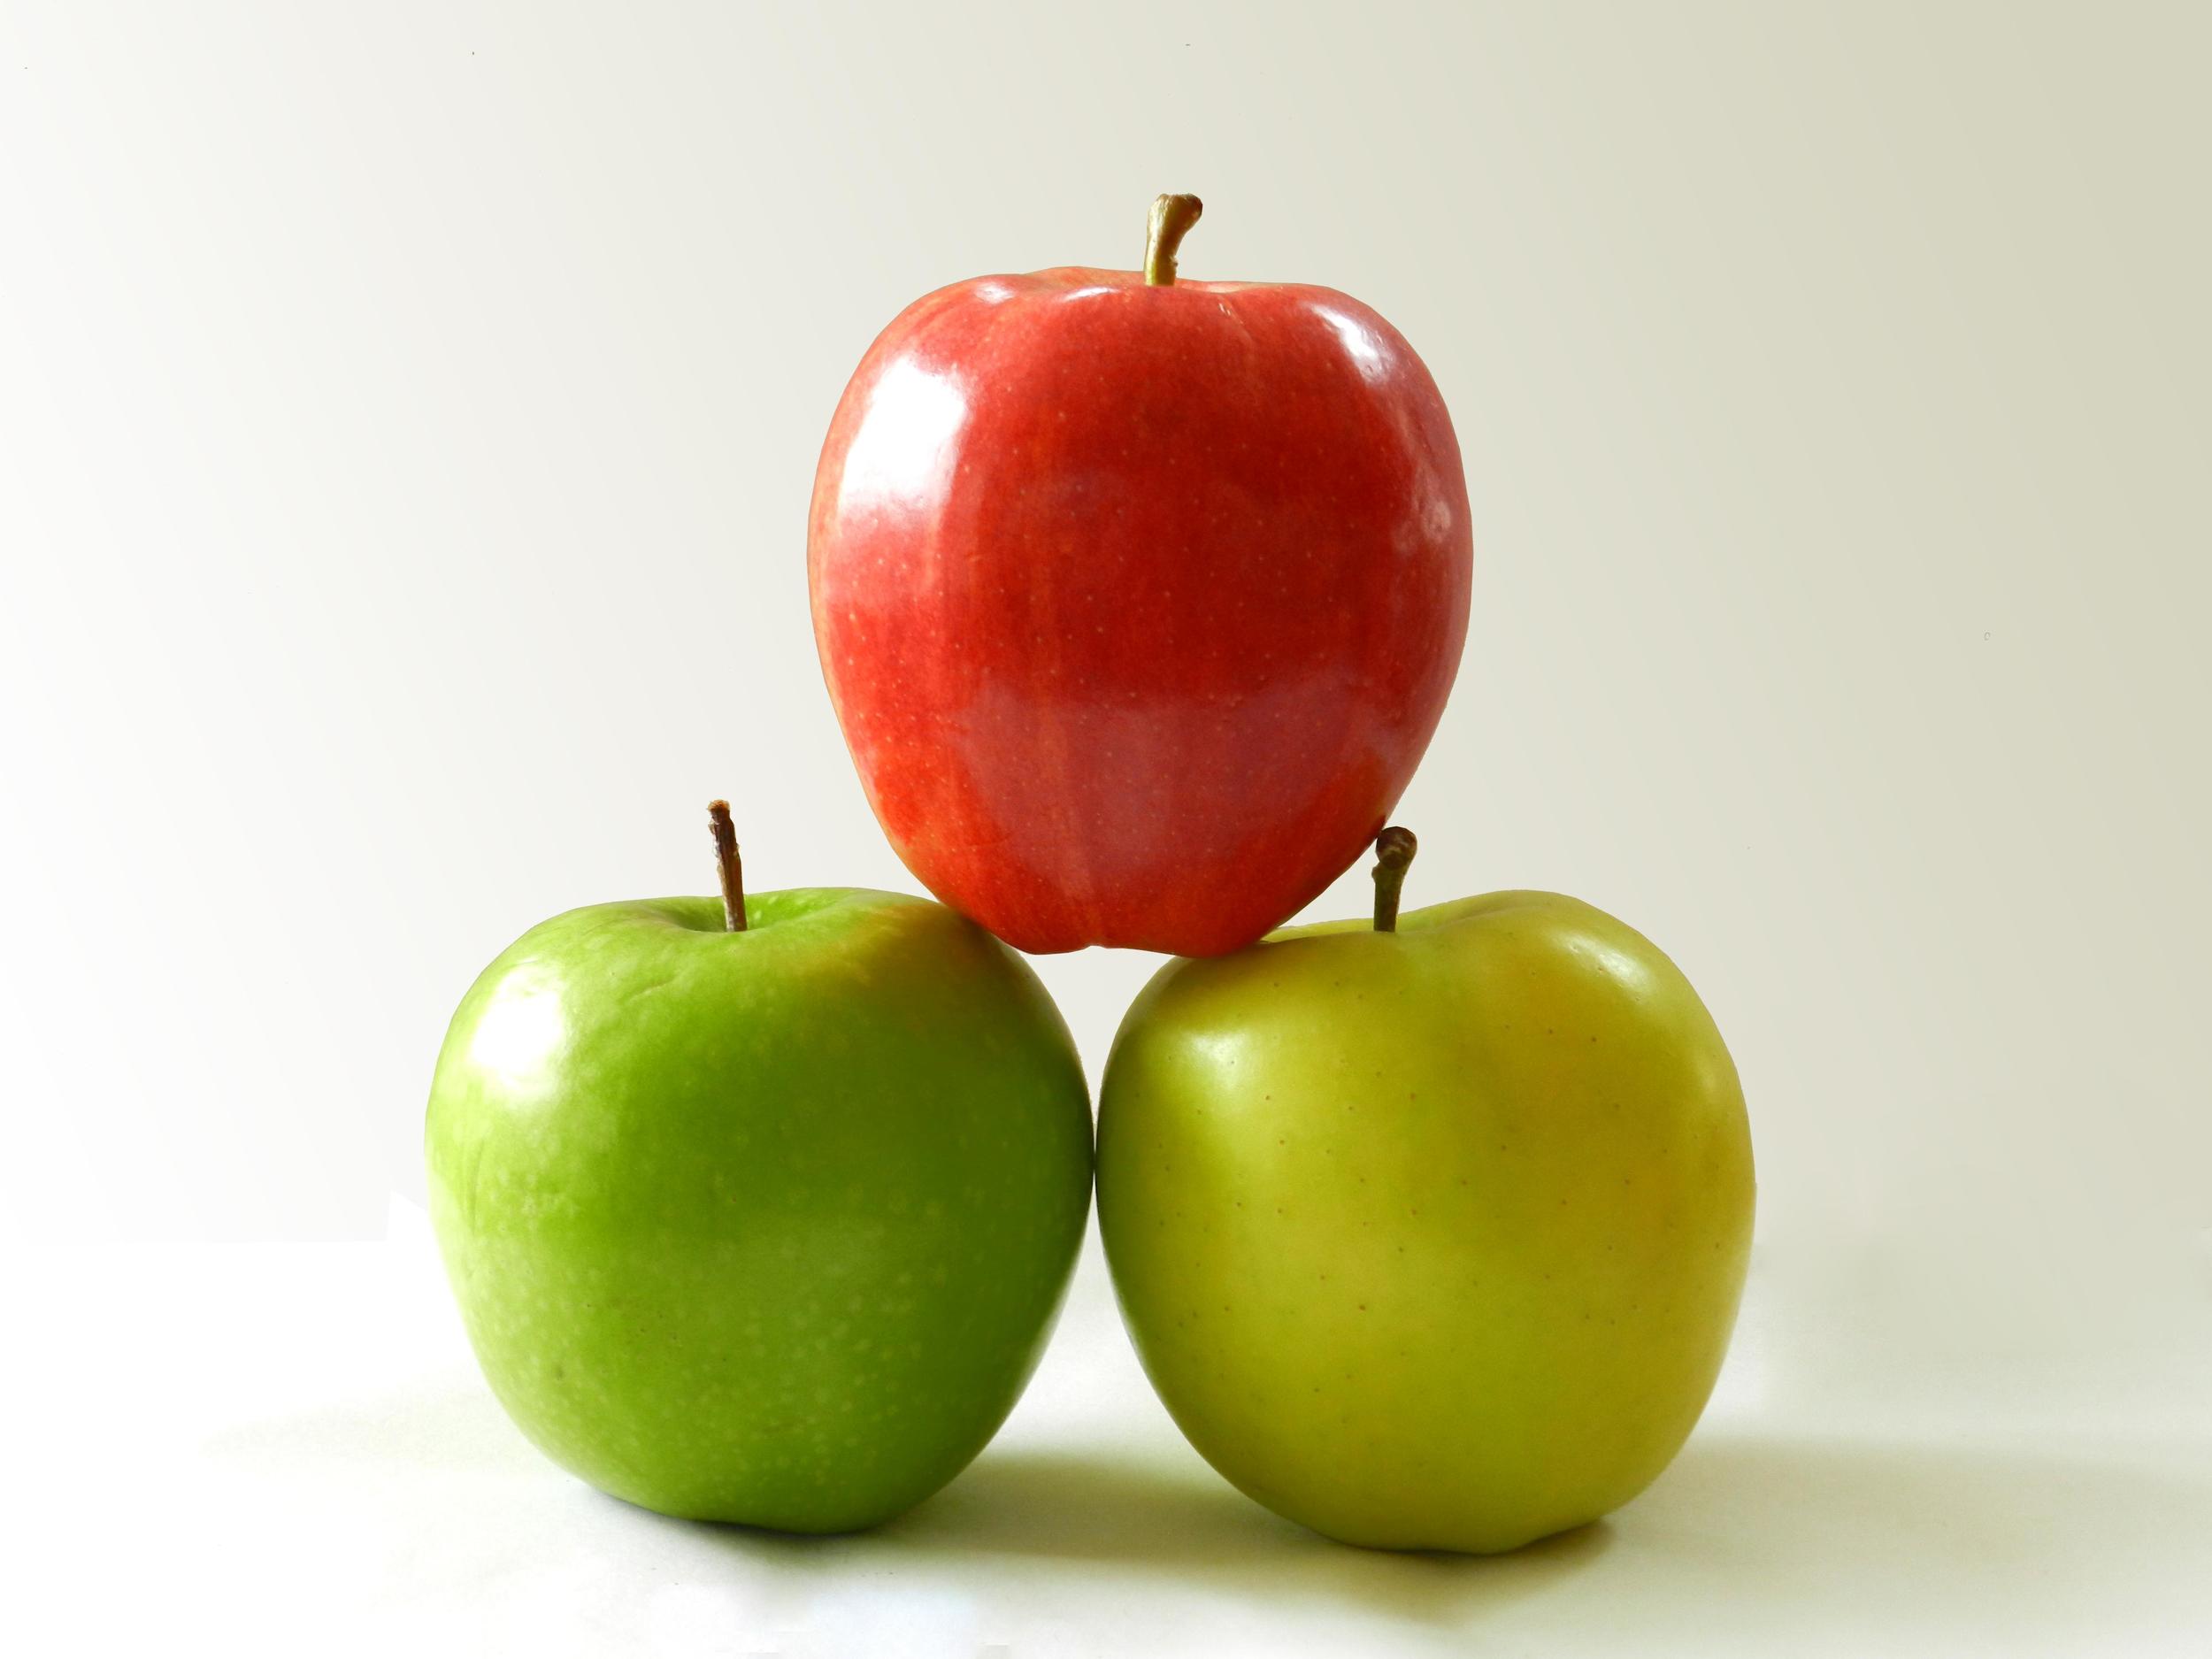 Apple three. Два яблока. Разные яблоки. Яблоки разного цвета. Два разных яблока.